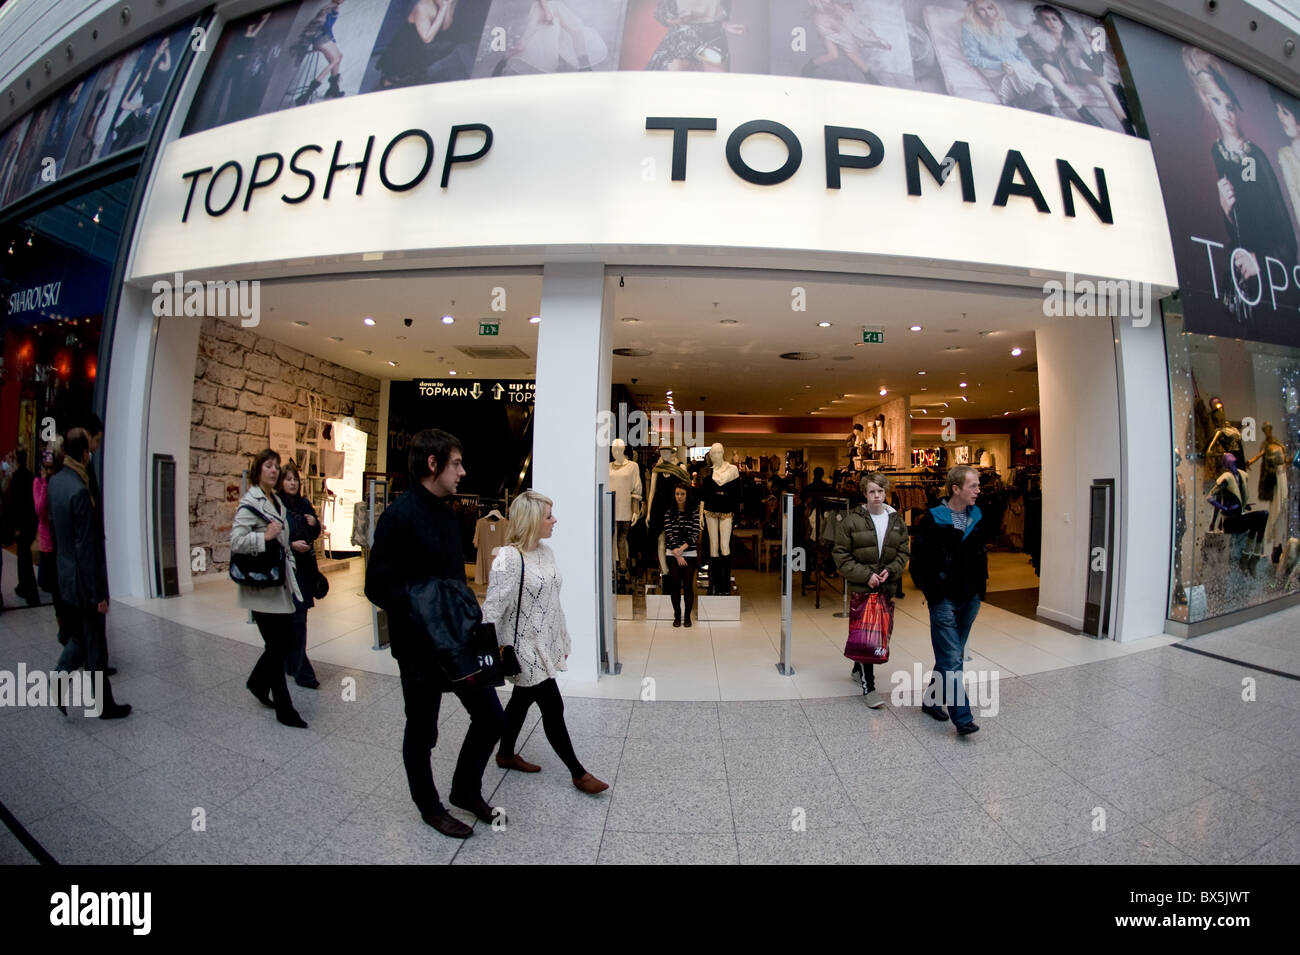 Topshop Topman shop top man shopping fashion high street clothes Stock  Photo - Alamy